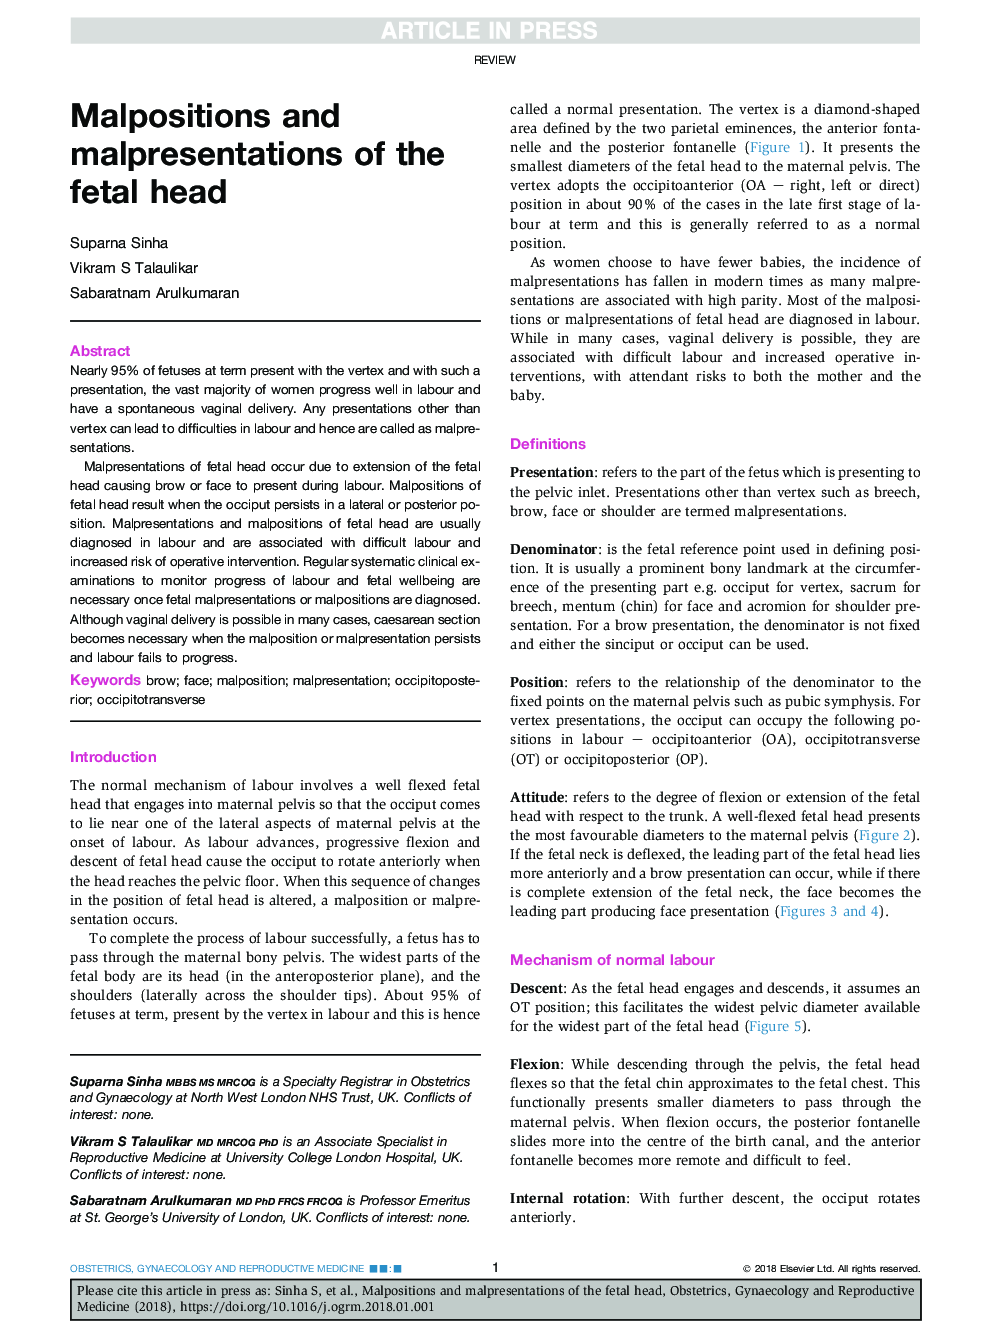 Malpositions and malpresentations of the fetal head